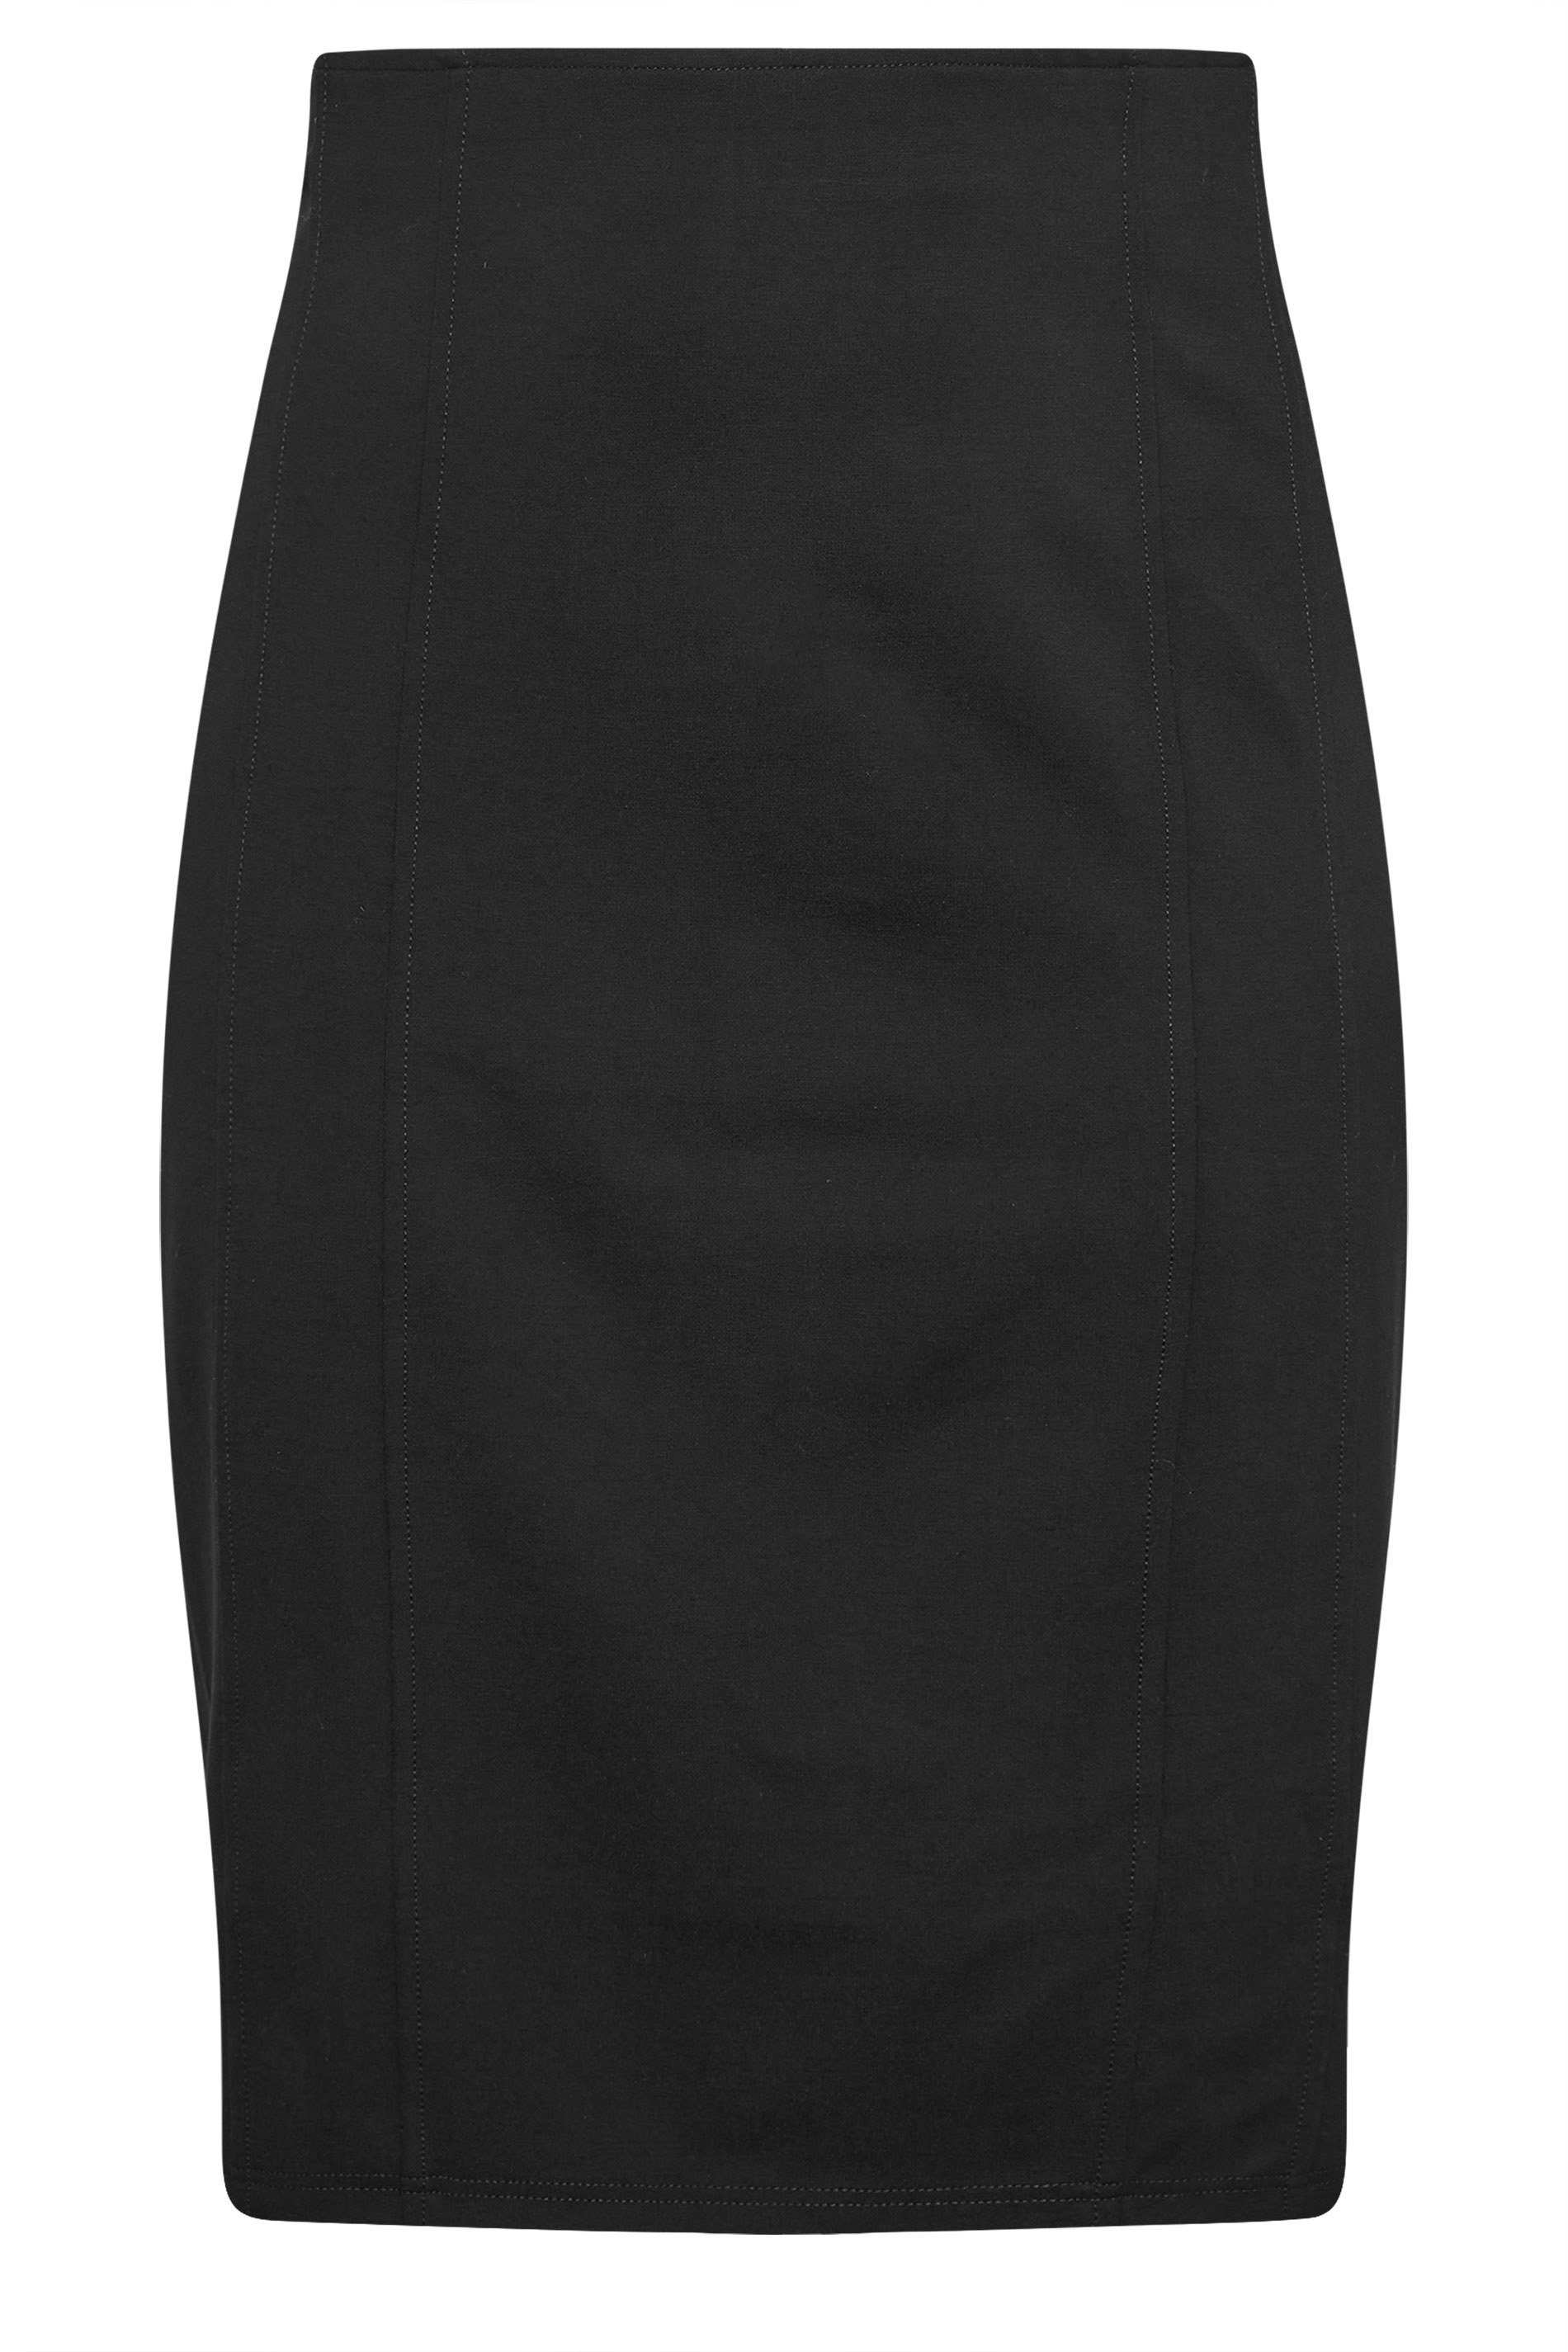 Navabi Black Bodycon Skirt | Evans